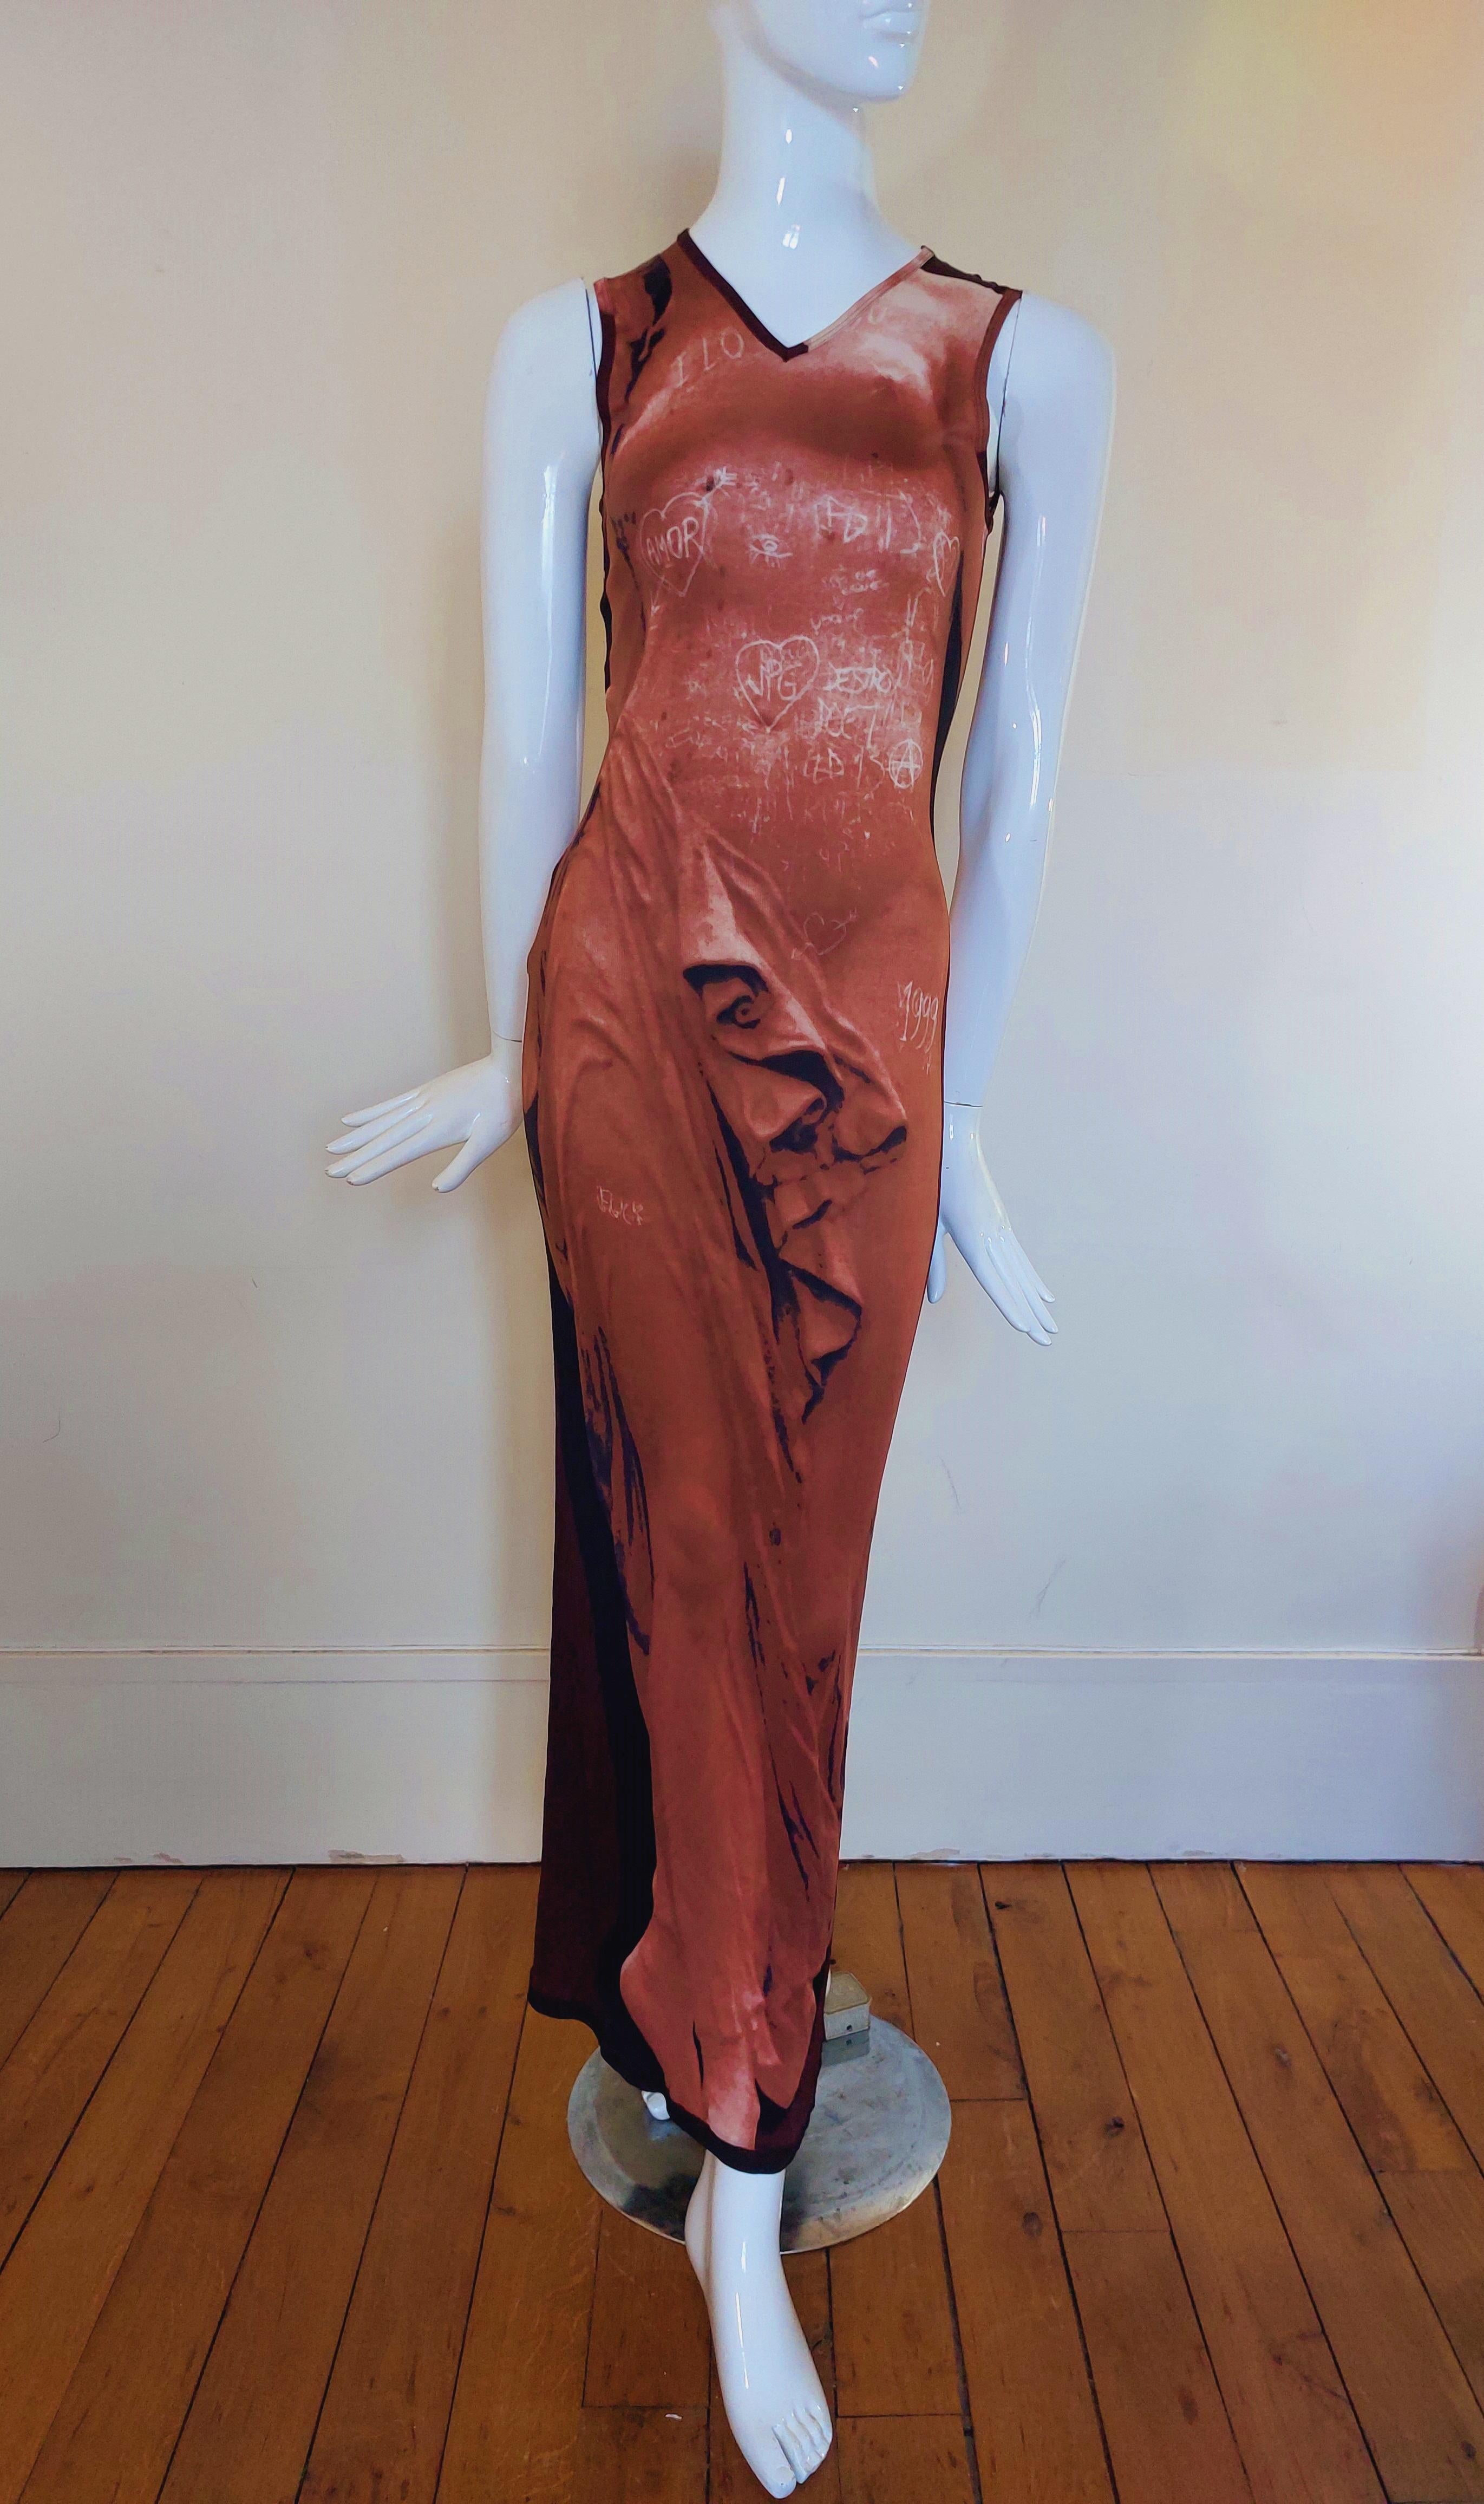 Jean Paul Gaultier S1999 Graffiti Goddess Venus Nude Trompe L'oeil Runway Dress In Excellent Condition For Sale In PARIS, FR